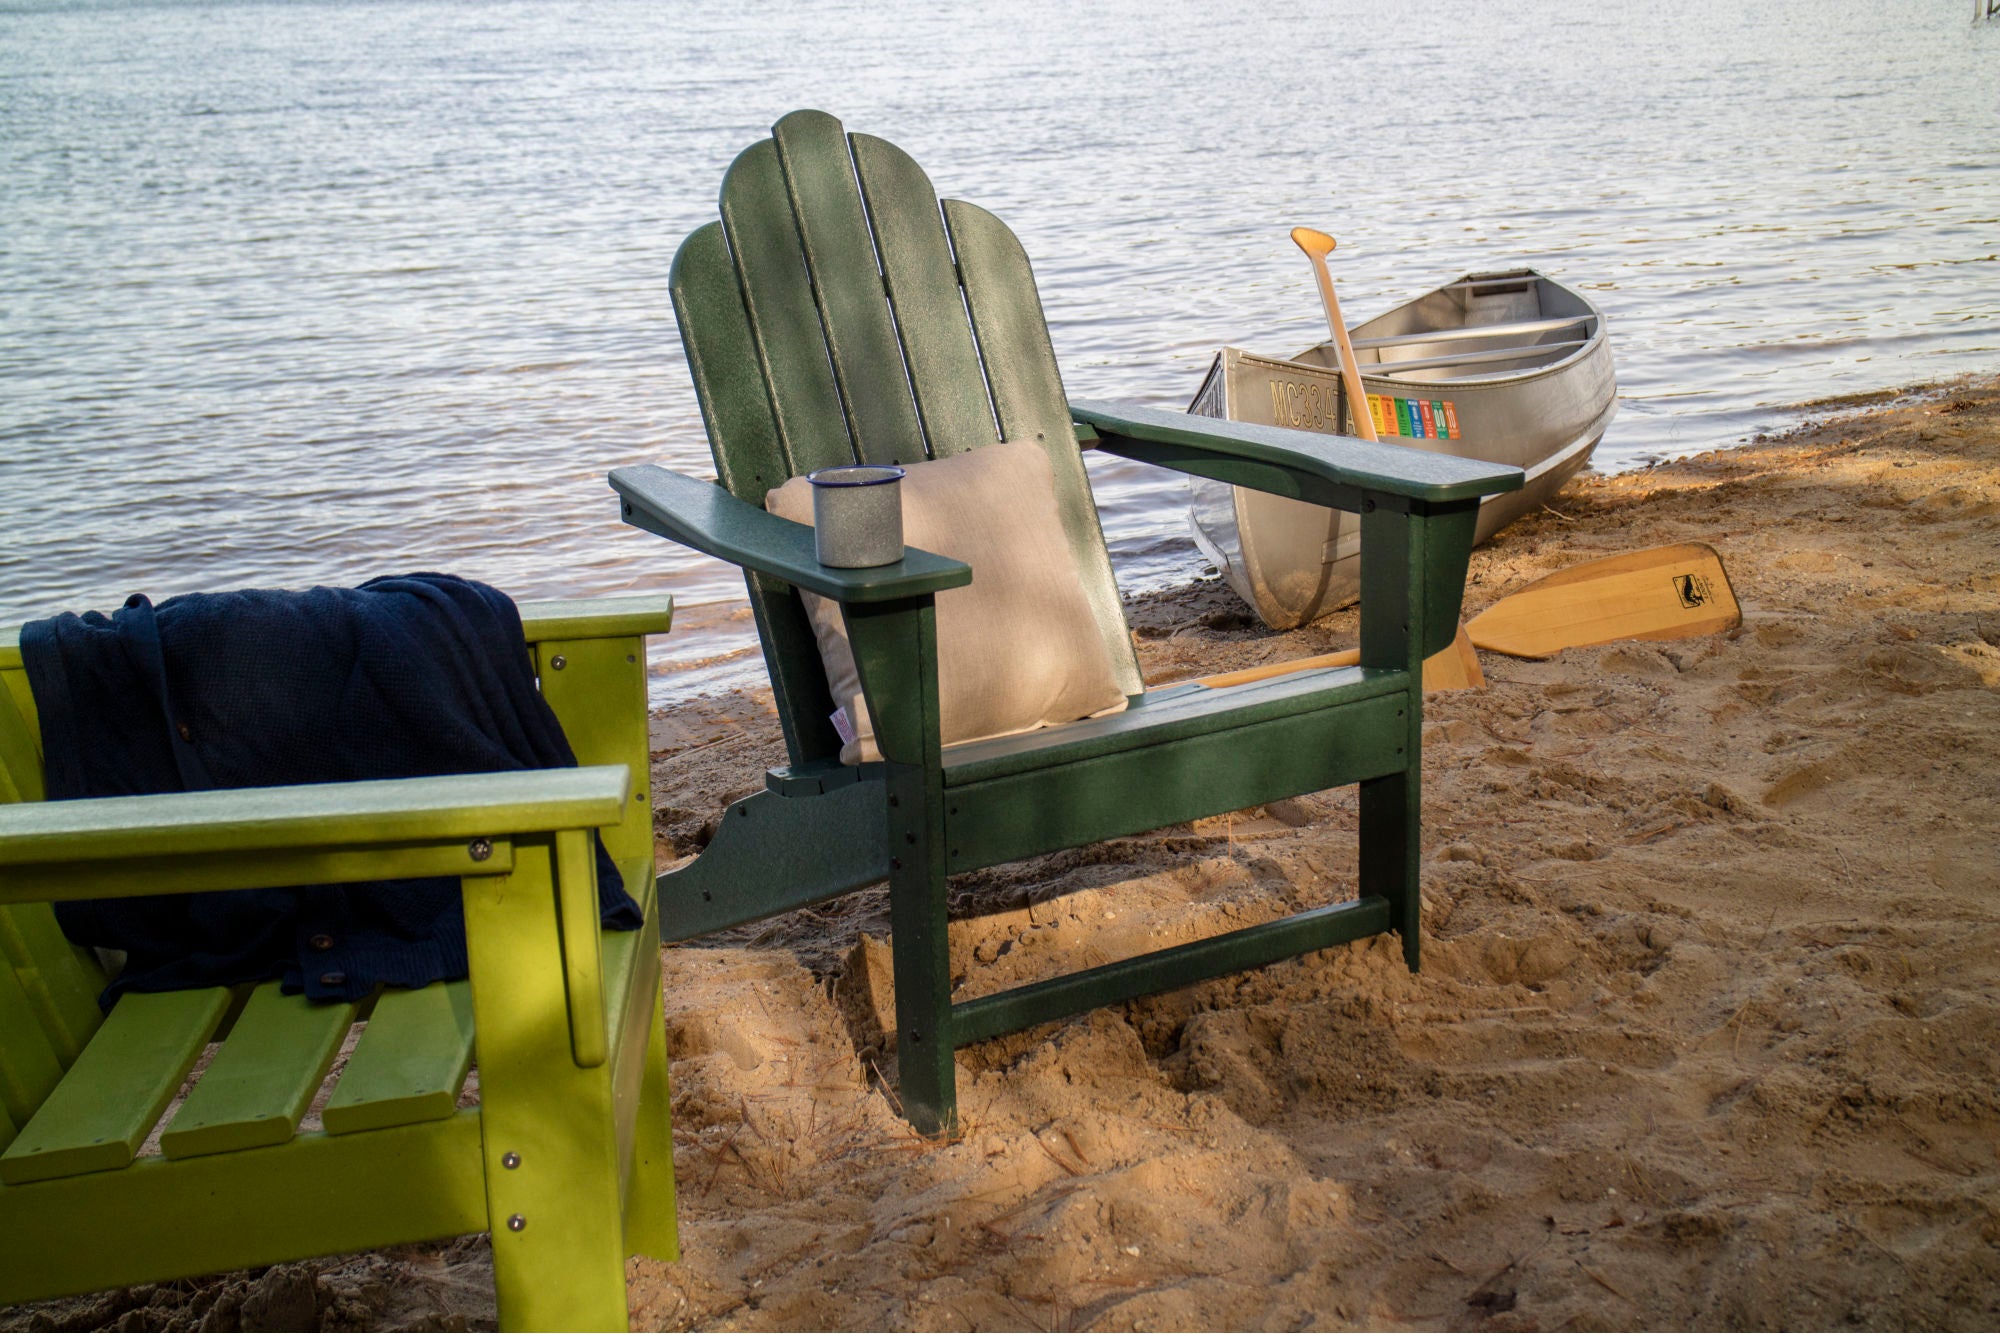 Long Island Adirondack Chair